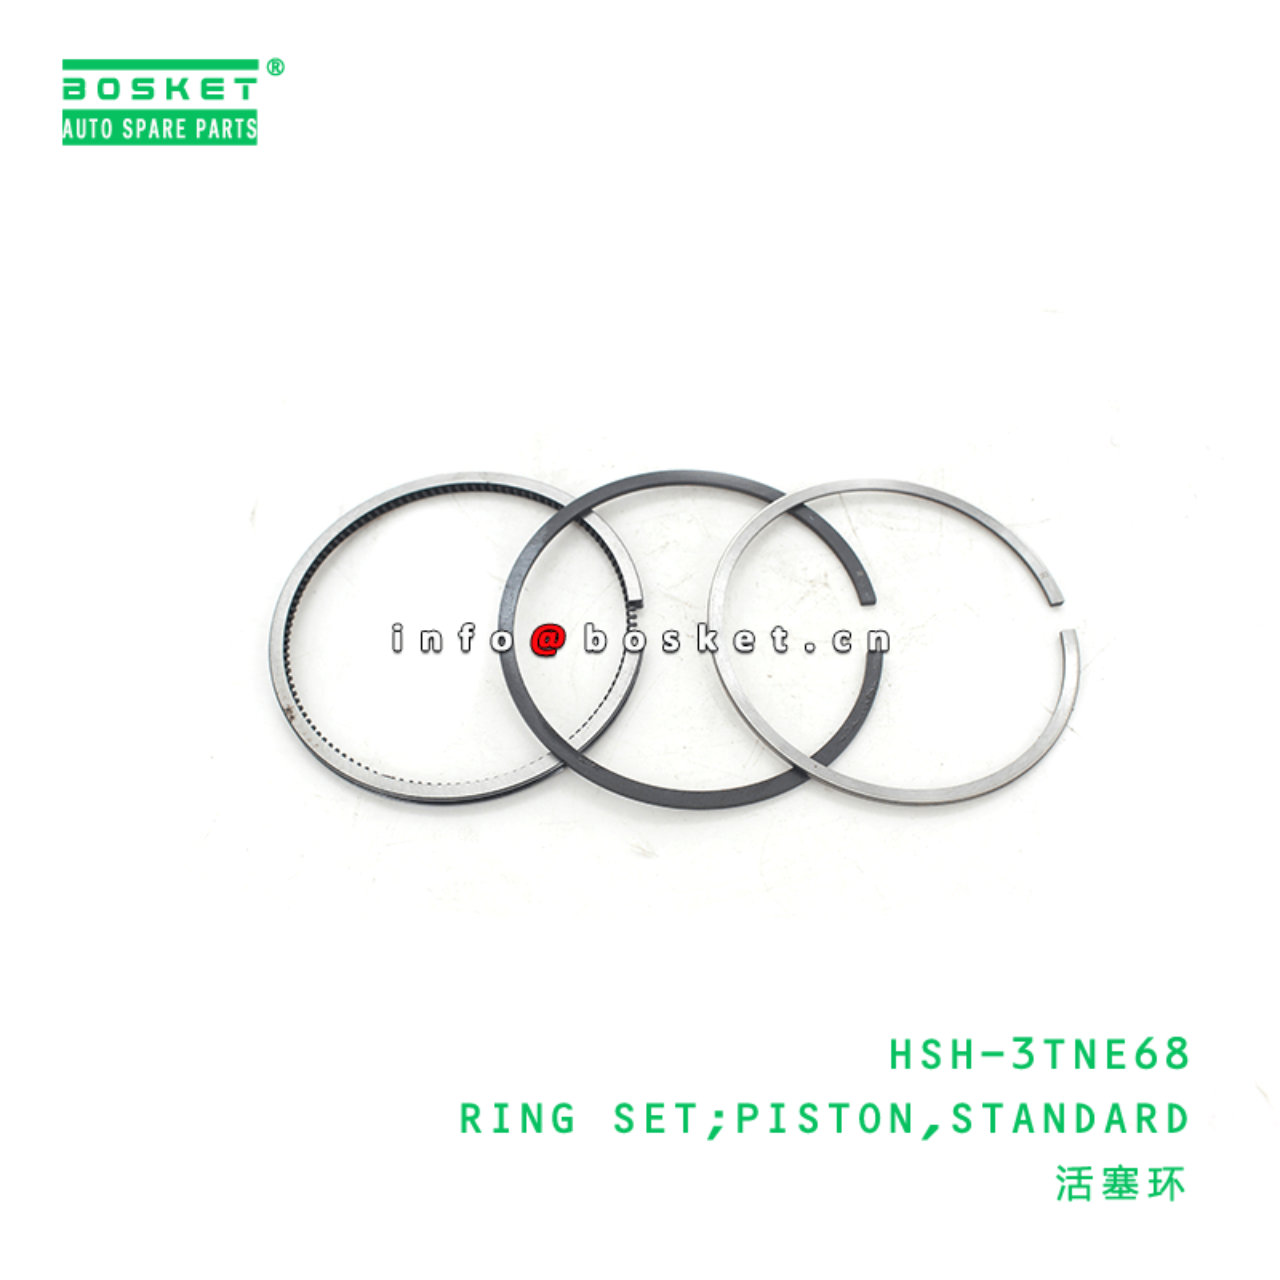  HSH-3TNE68 Standard Piston Ring Set Suitable For ISUZU 3TNE68 